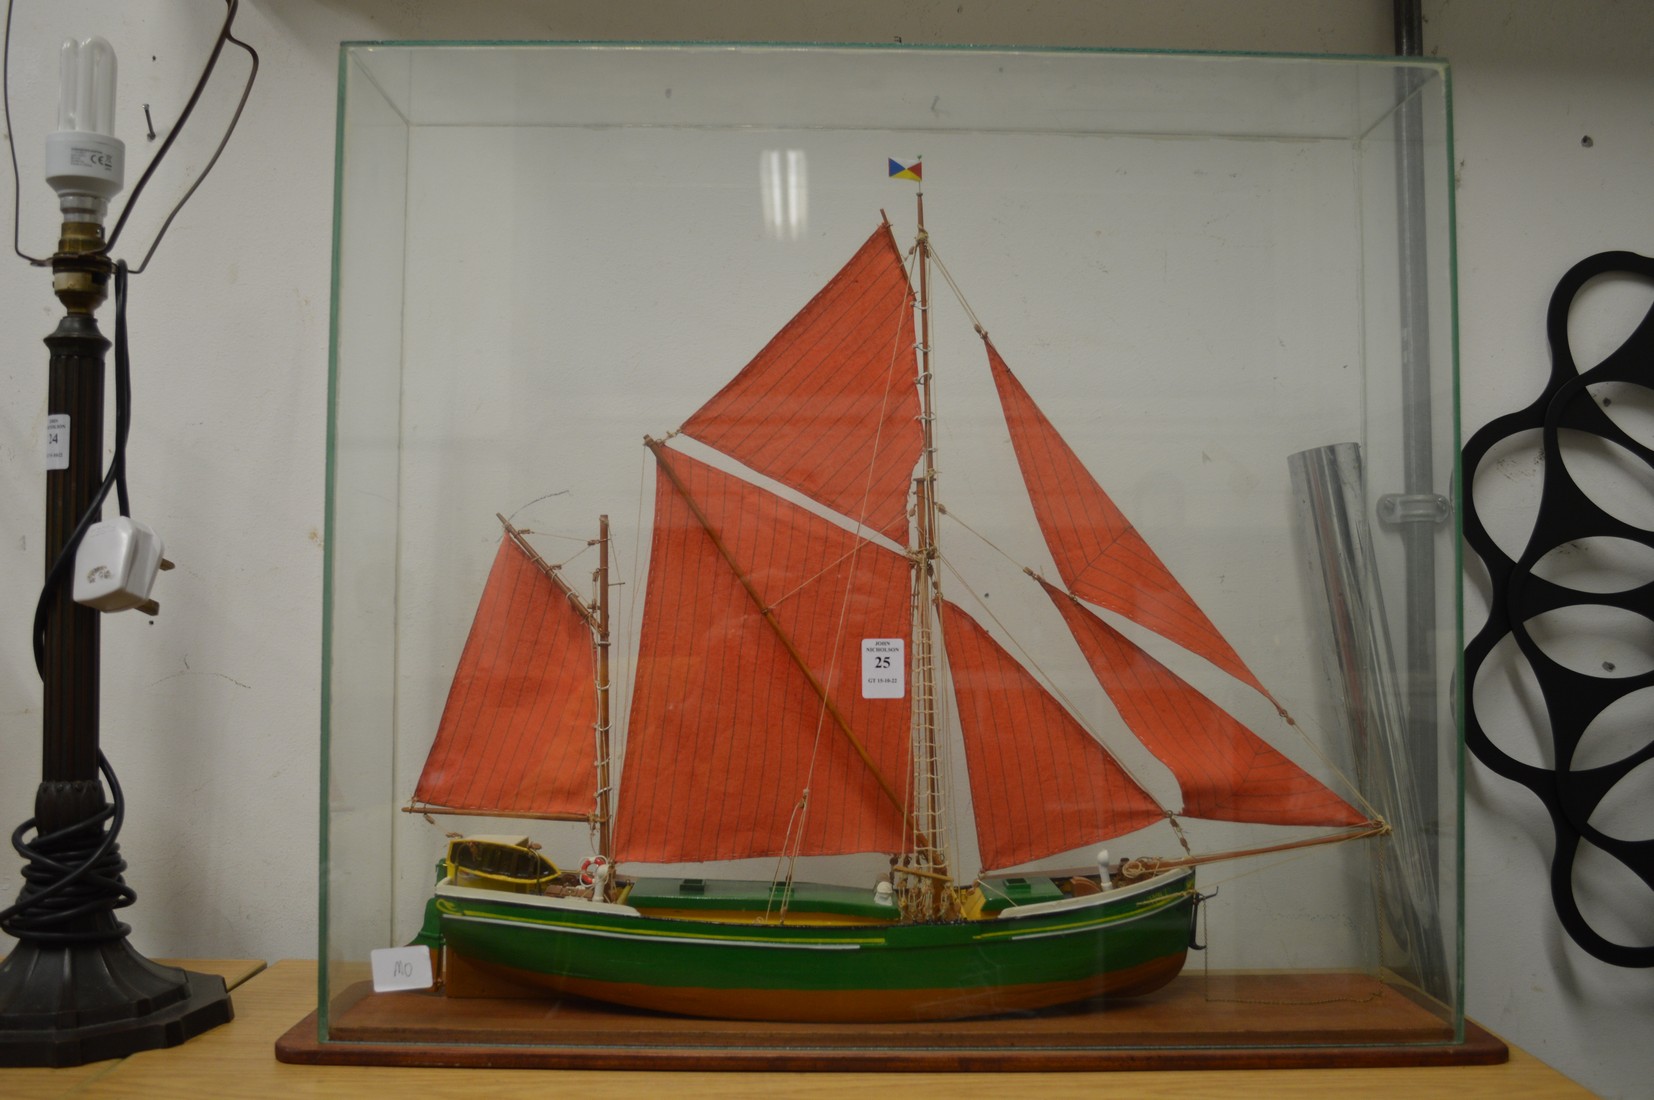 A model sailing ship in a glass case.